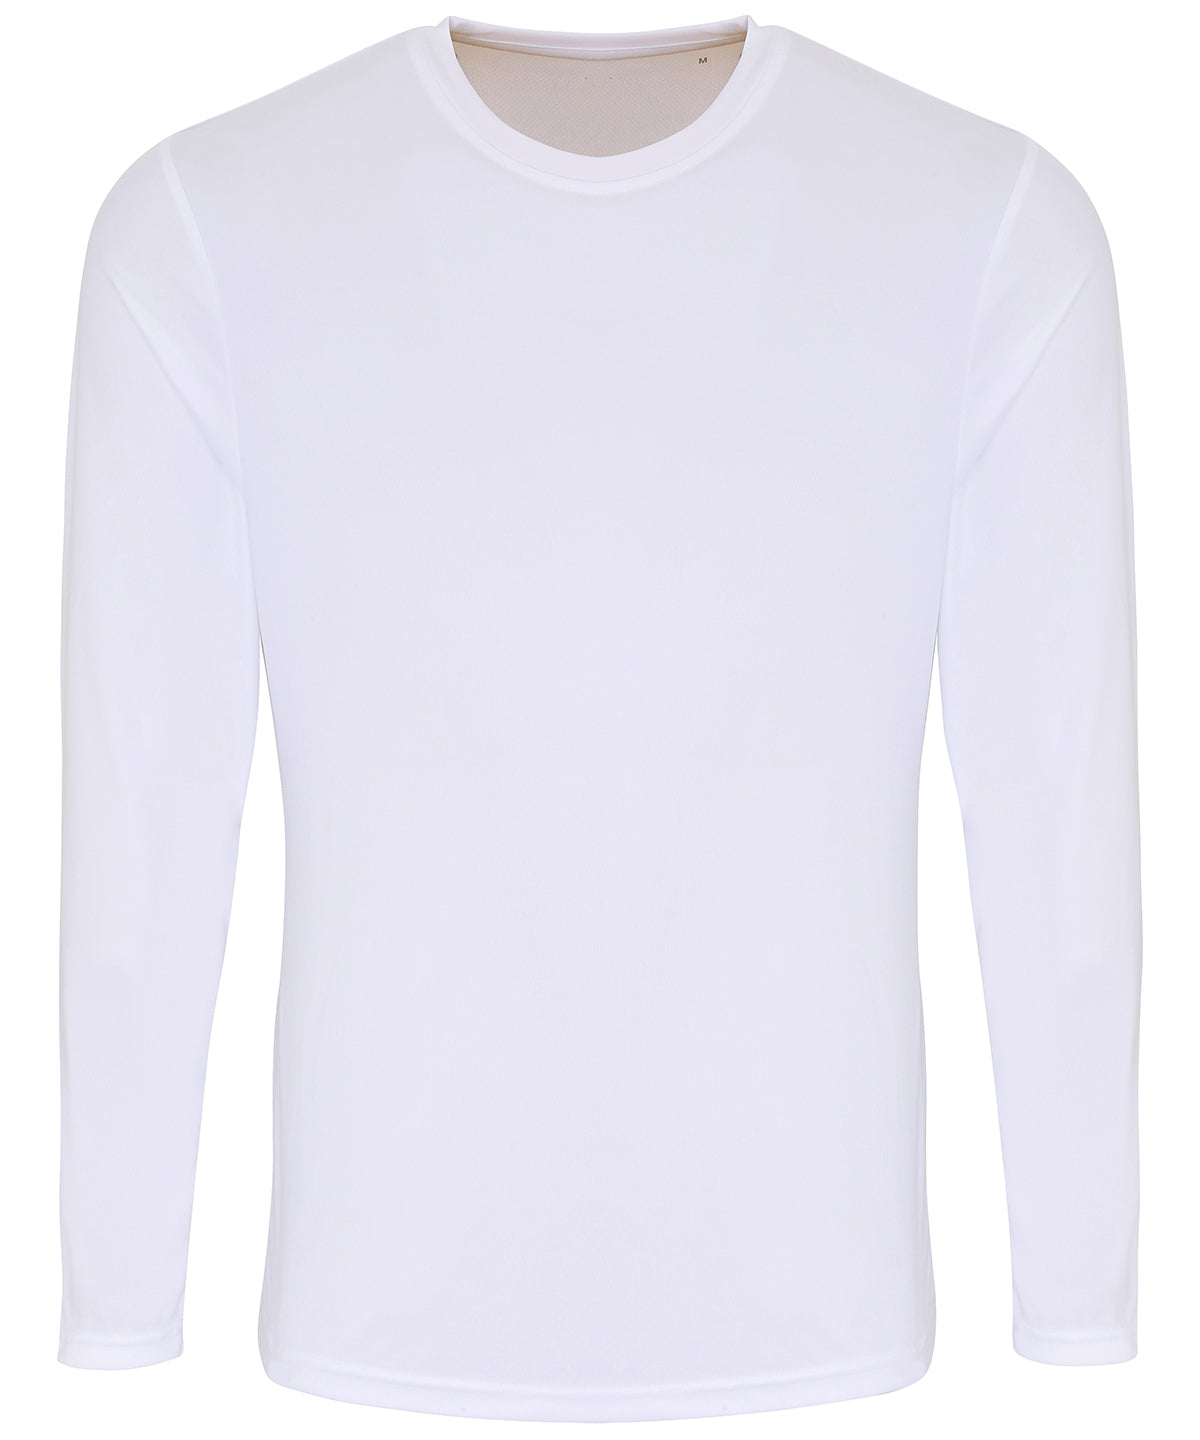 TriDri Long Sleeve Performance T-Shirt